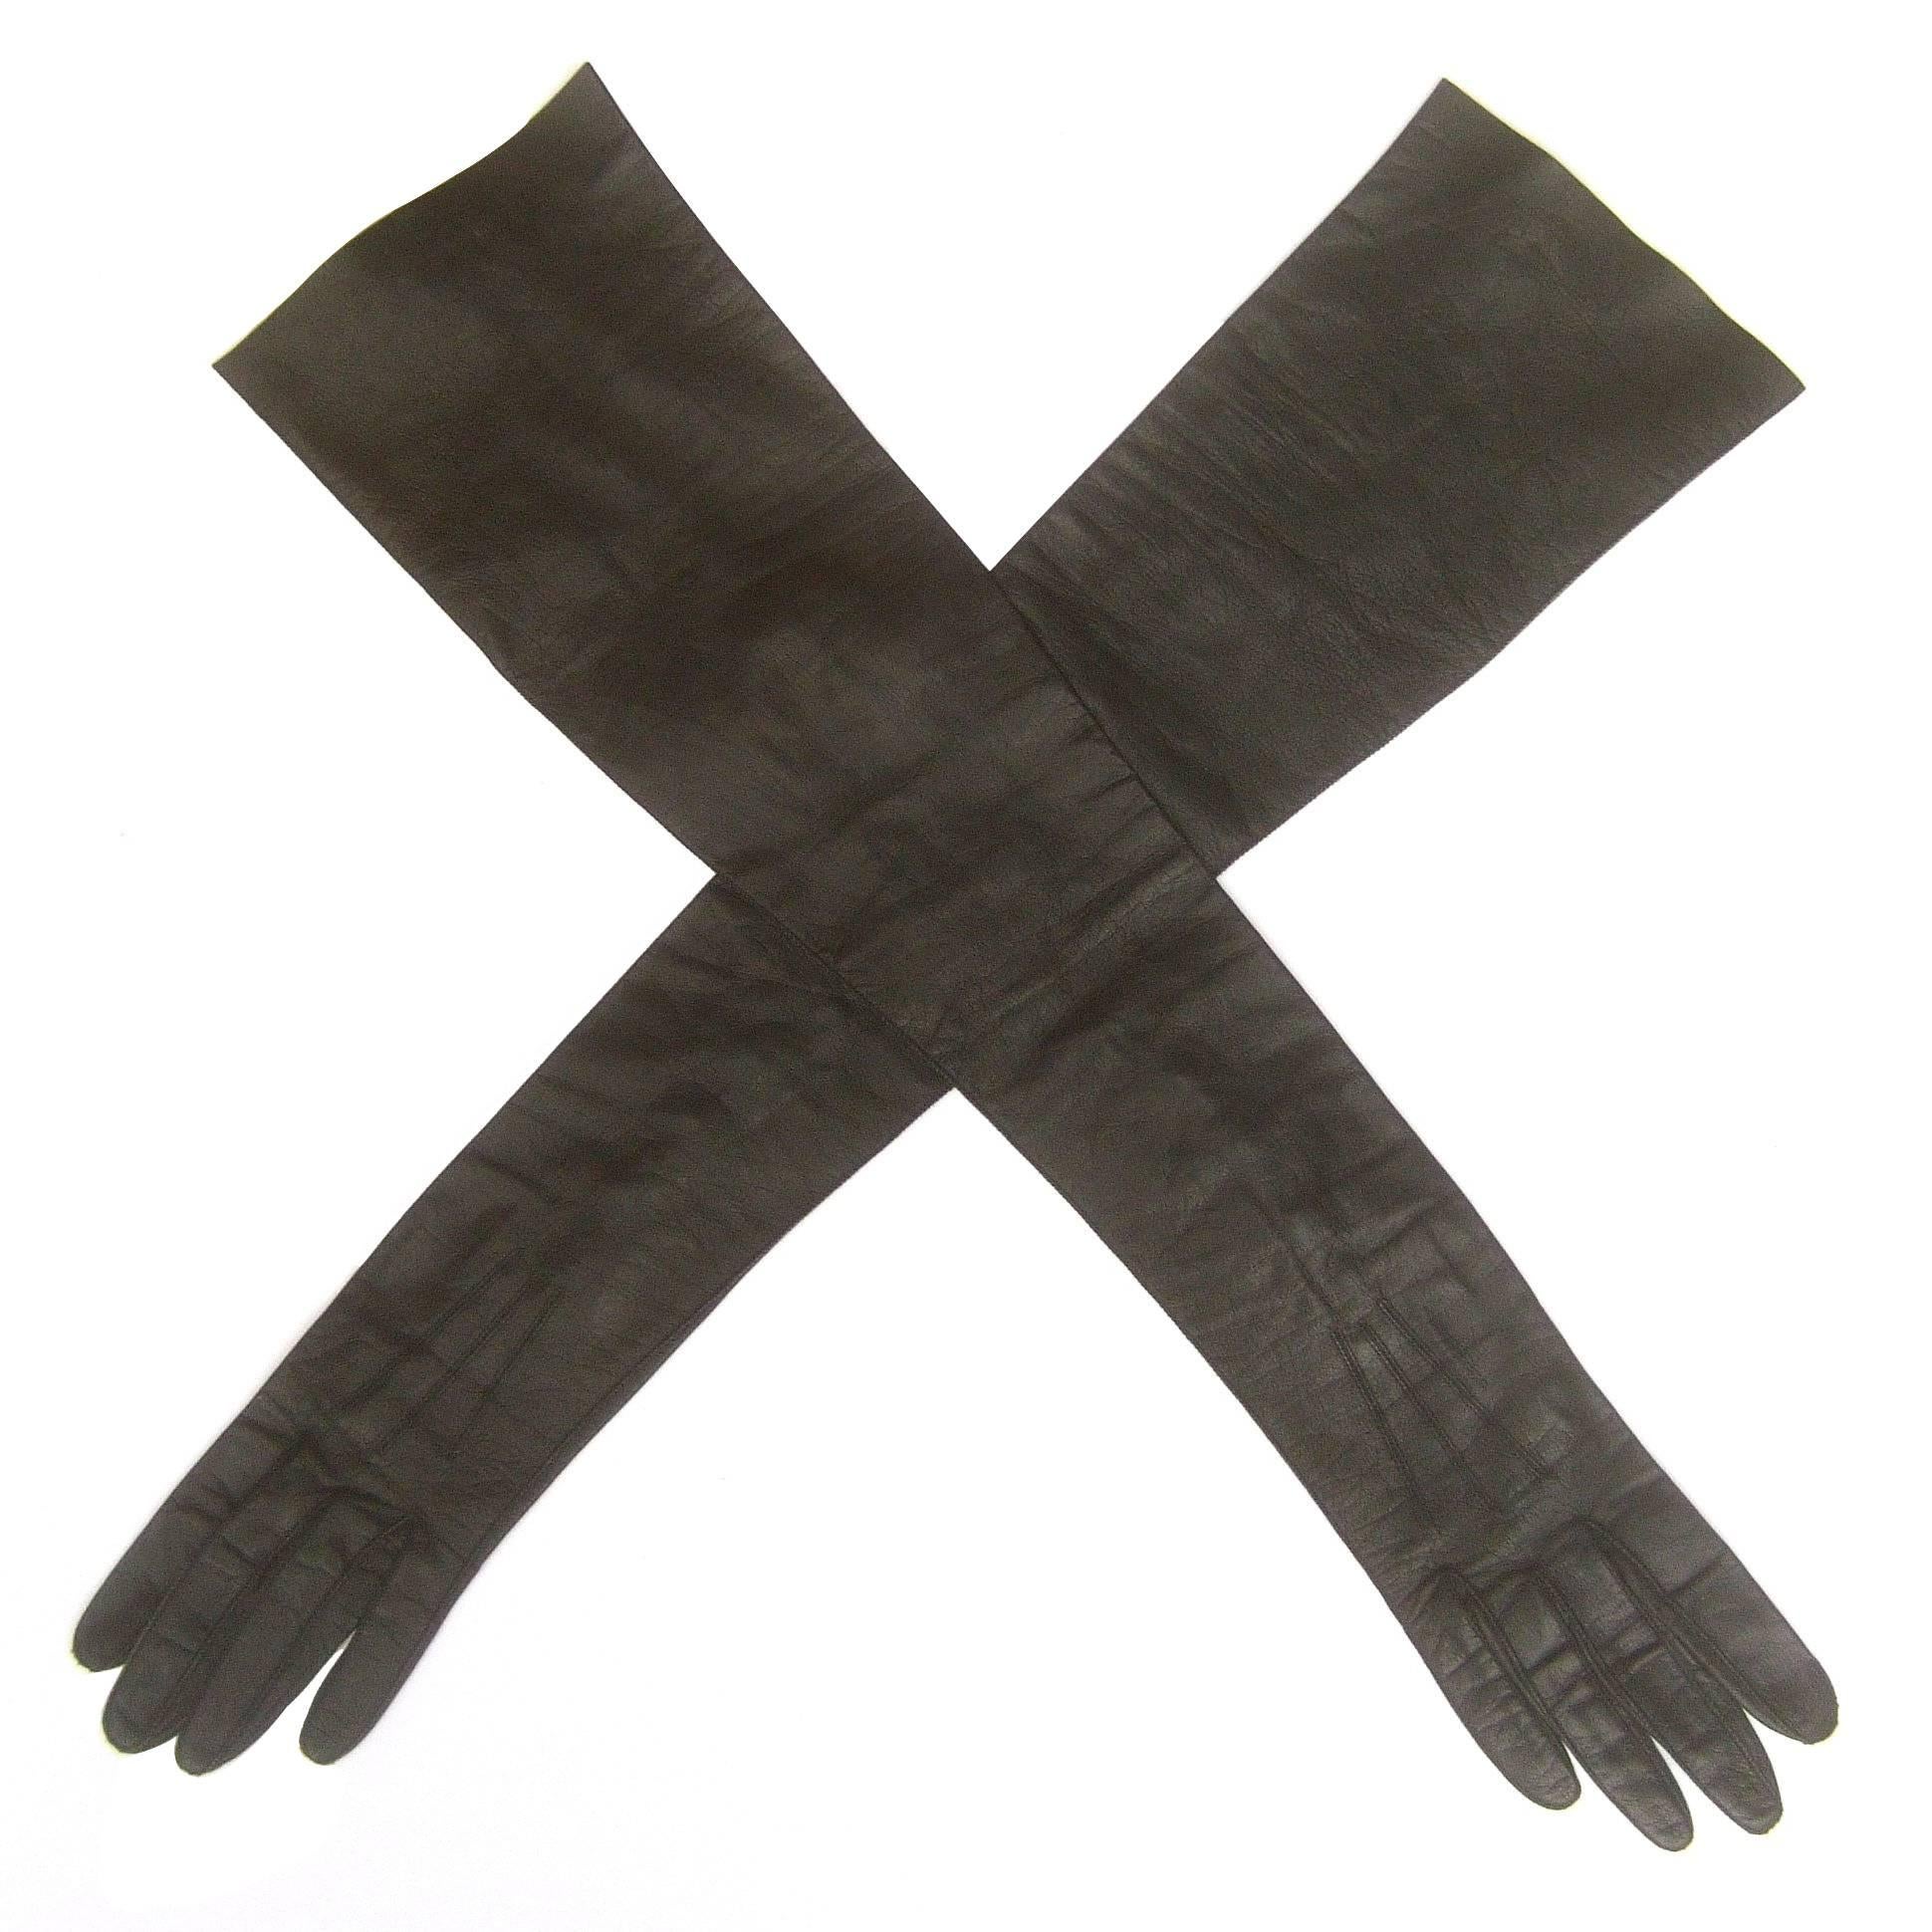 Sleek Ebony Opera Length Kid Skin Leather Gloves c 1970s